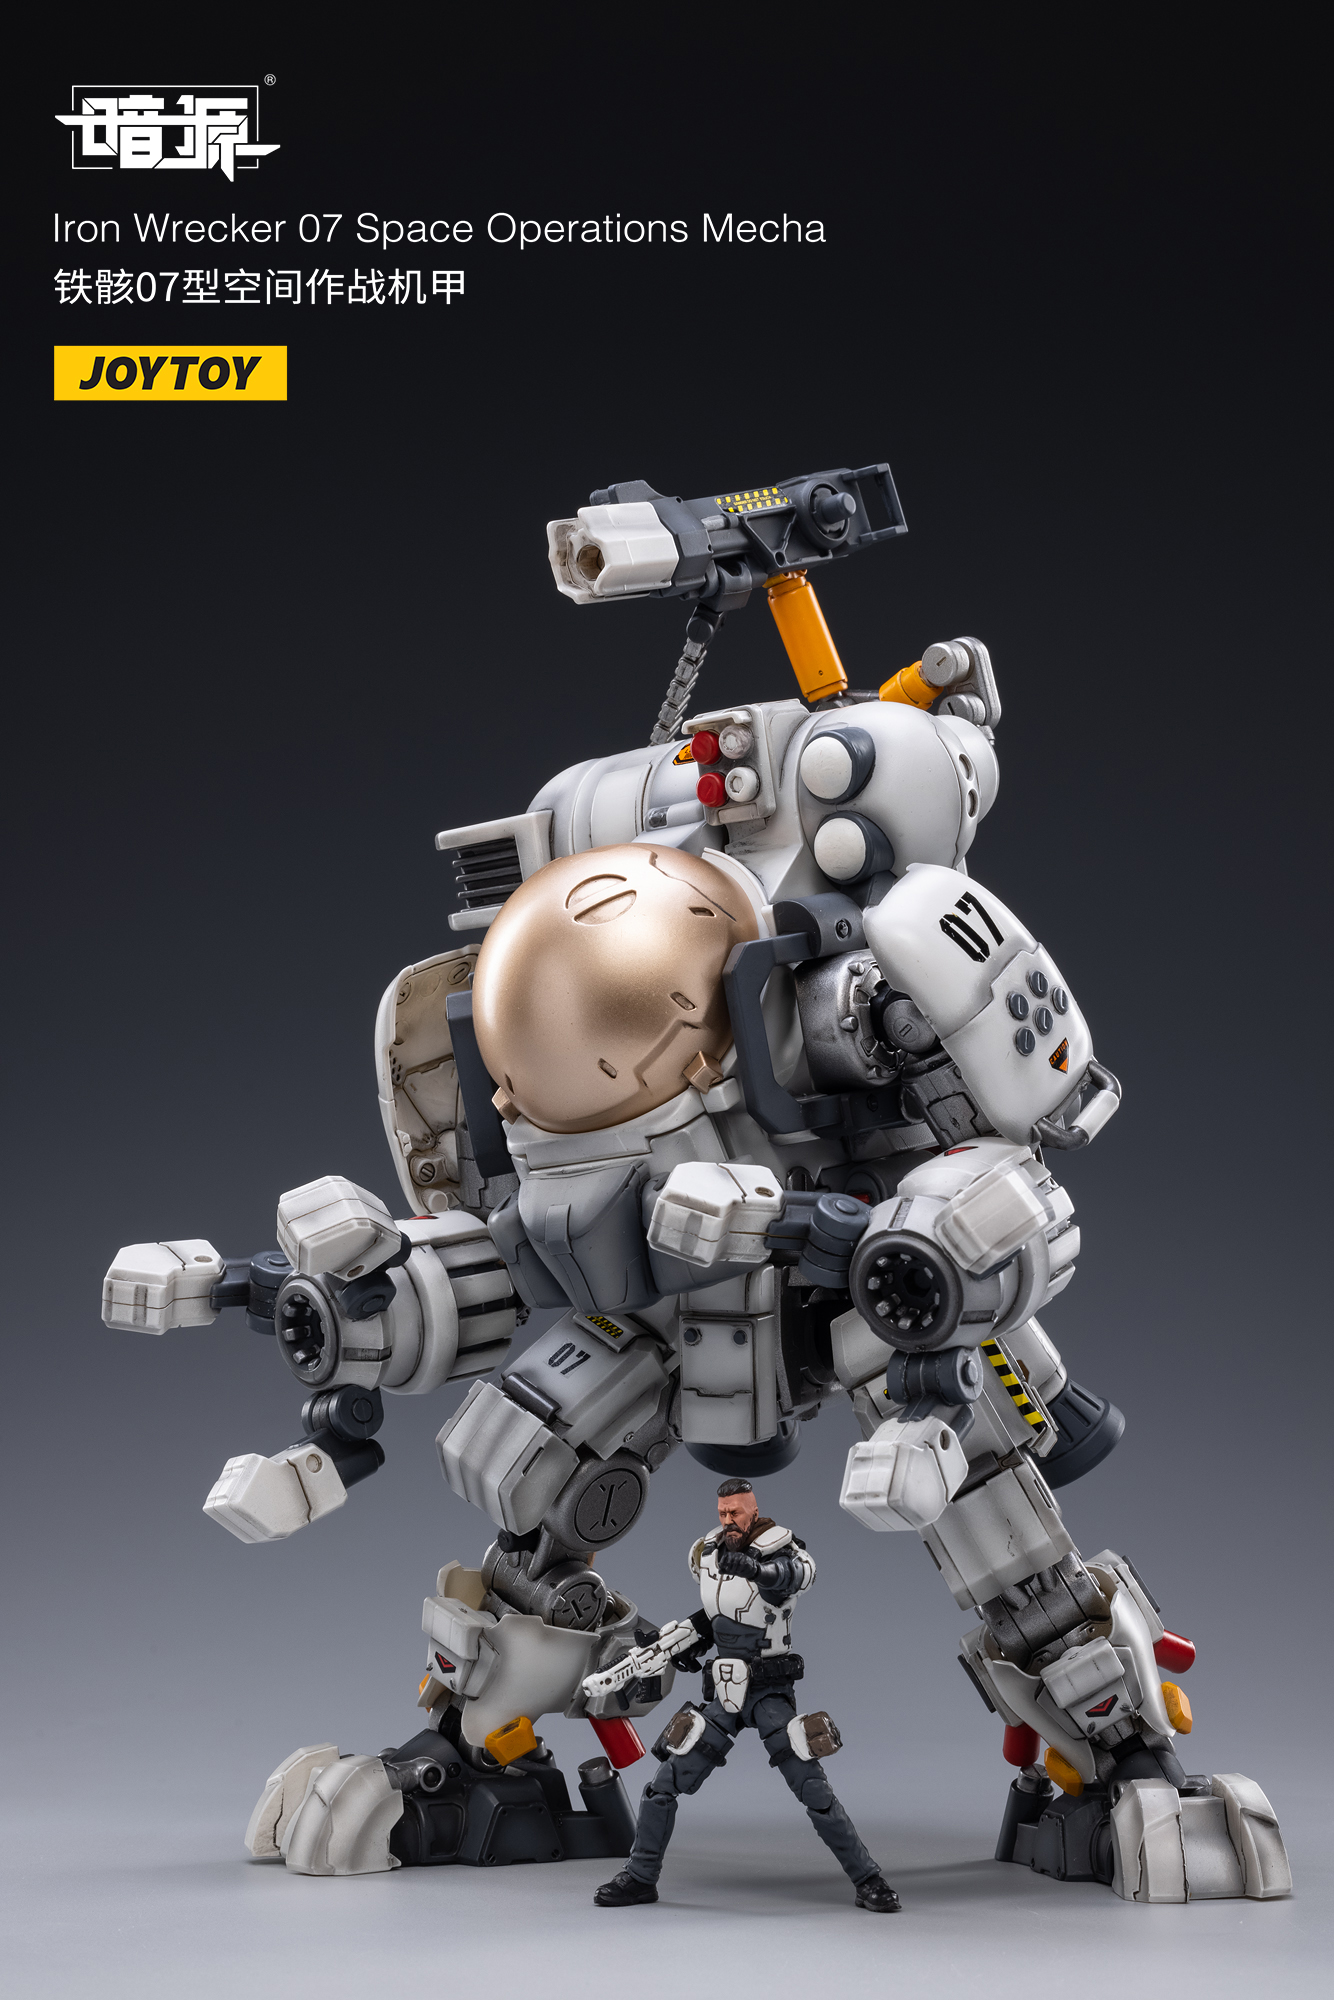 Joy Toy - Iron Wrecker 07 Space Operations Mecha 1/25 Action Figure